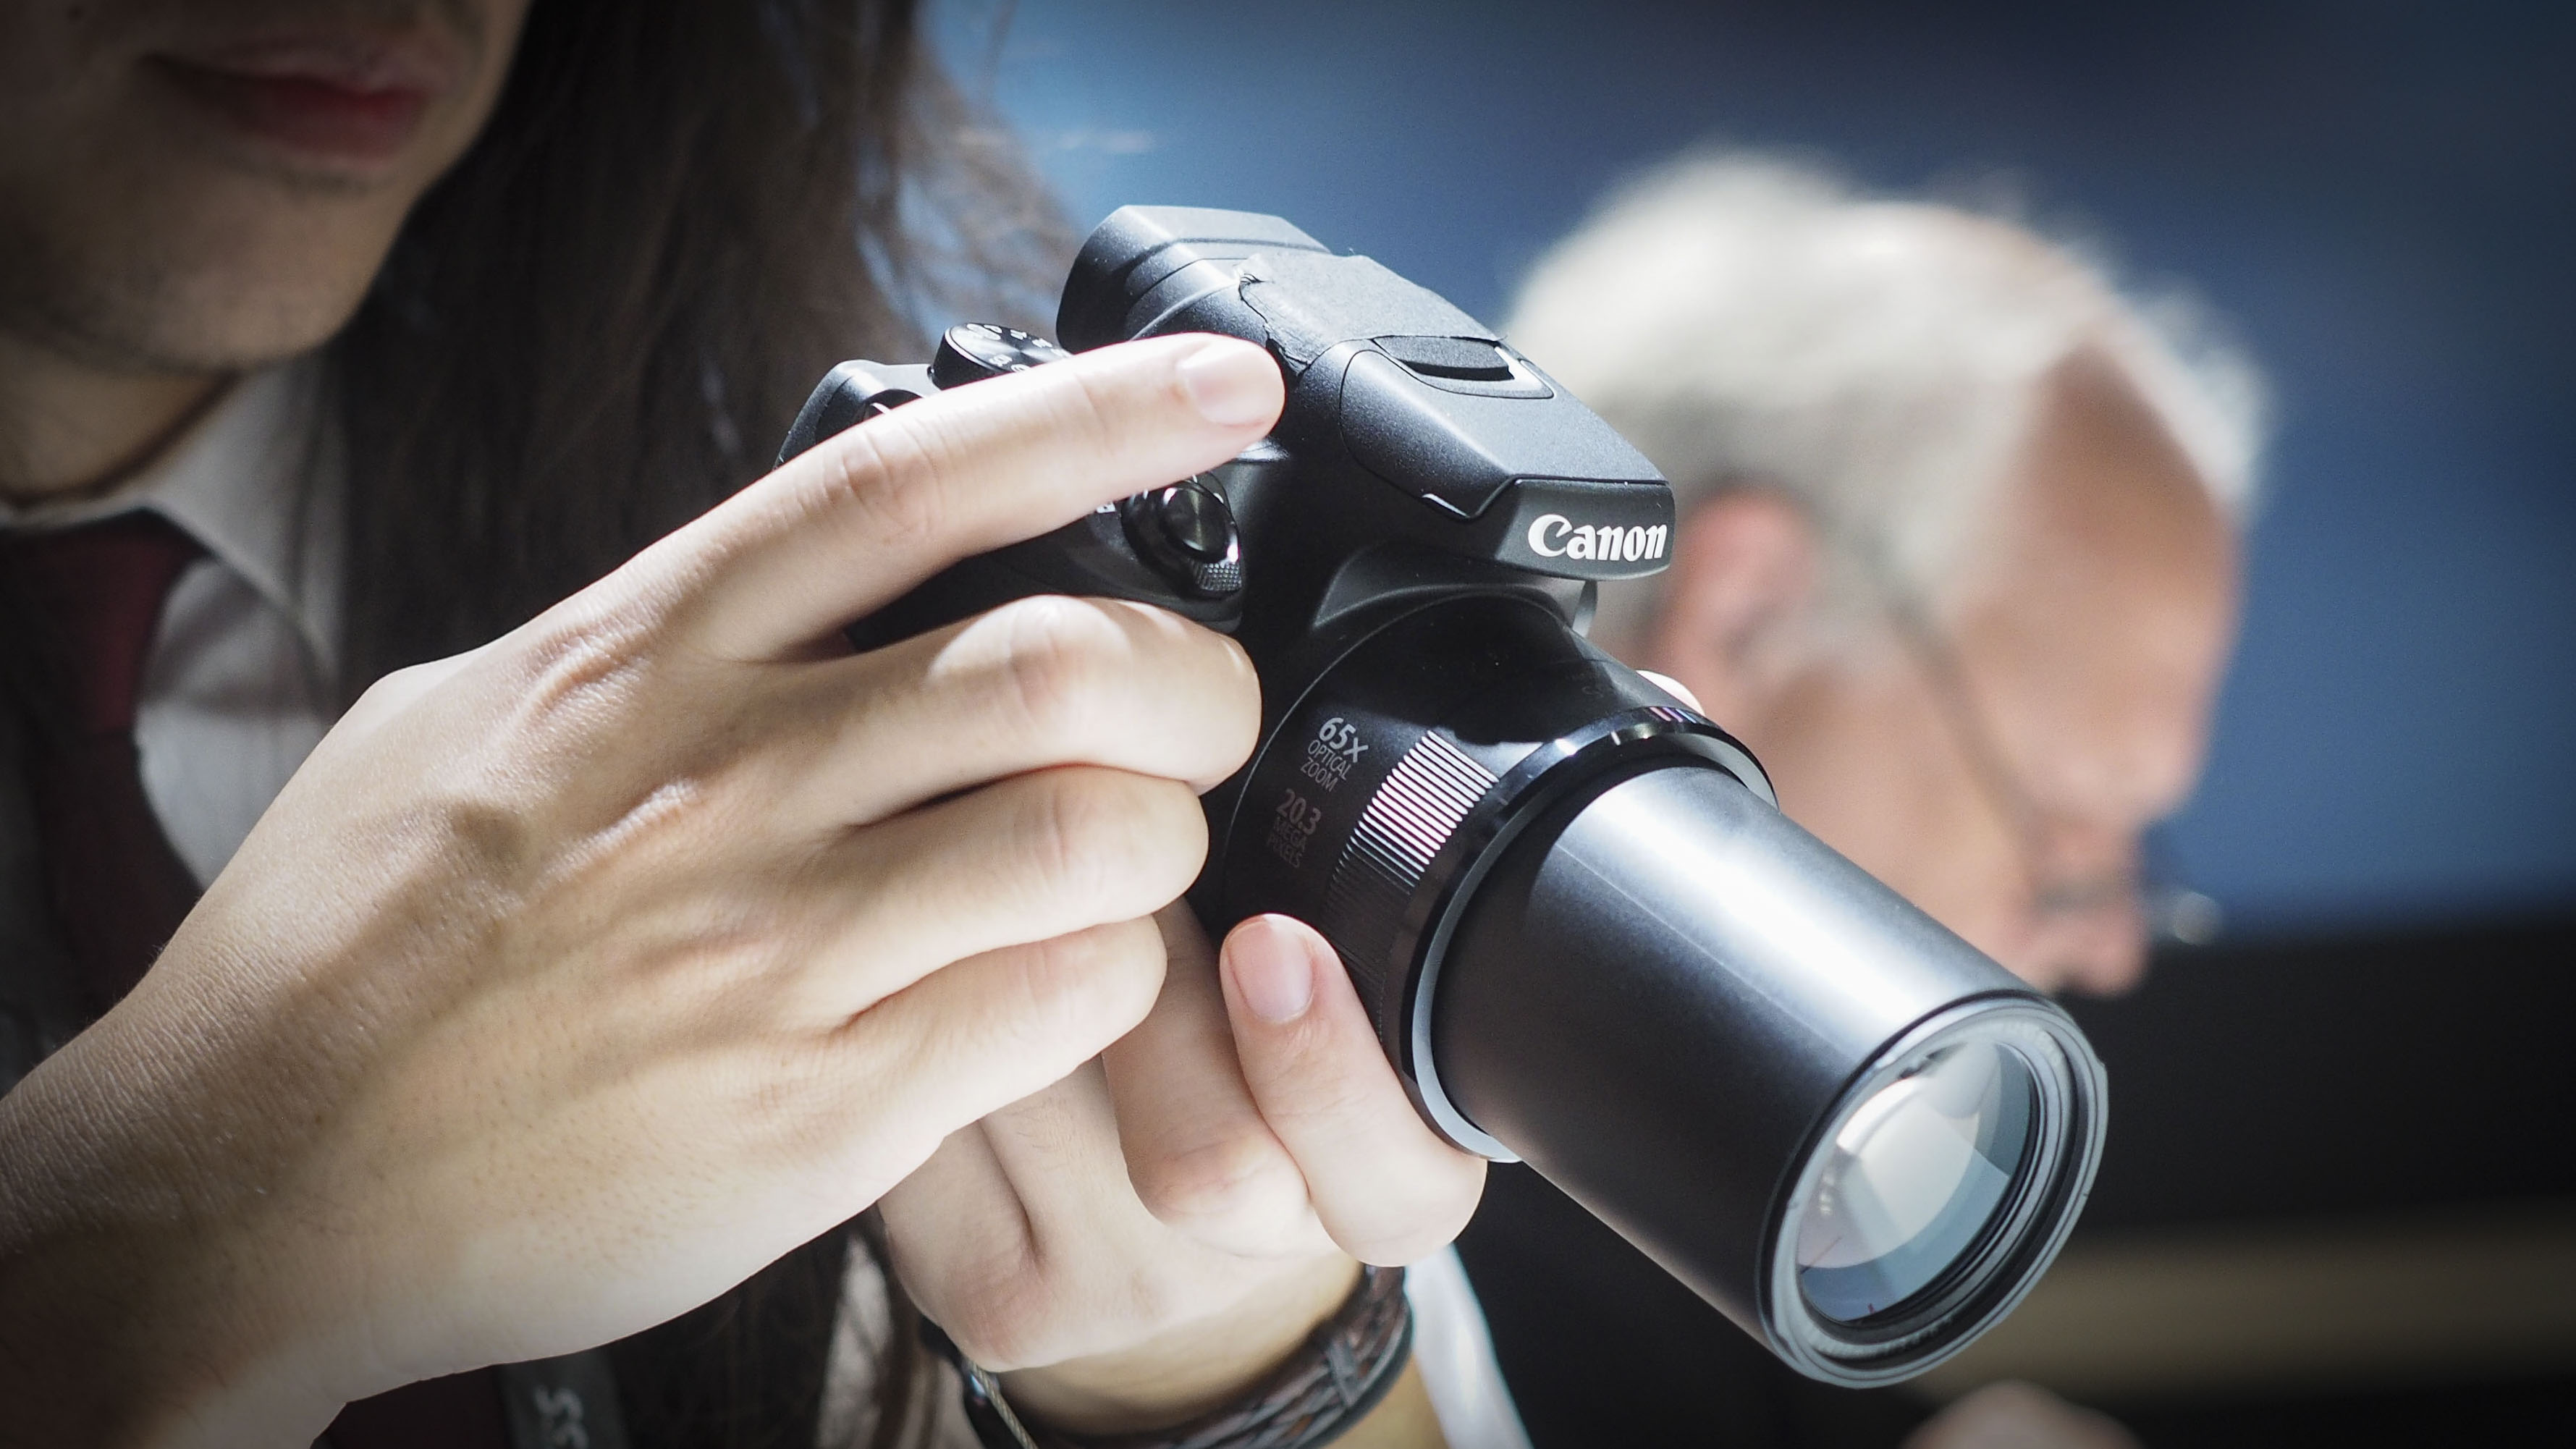 Canon PowerShot SX70 HS review | Digital Camera World